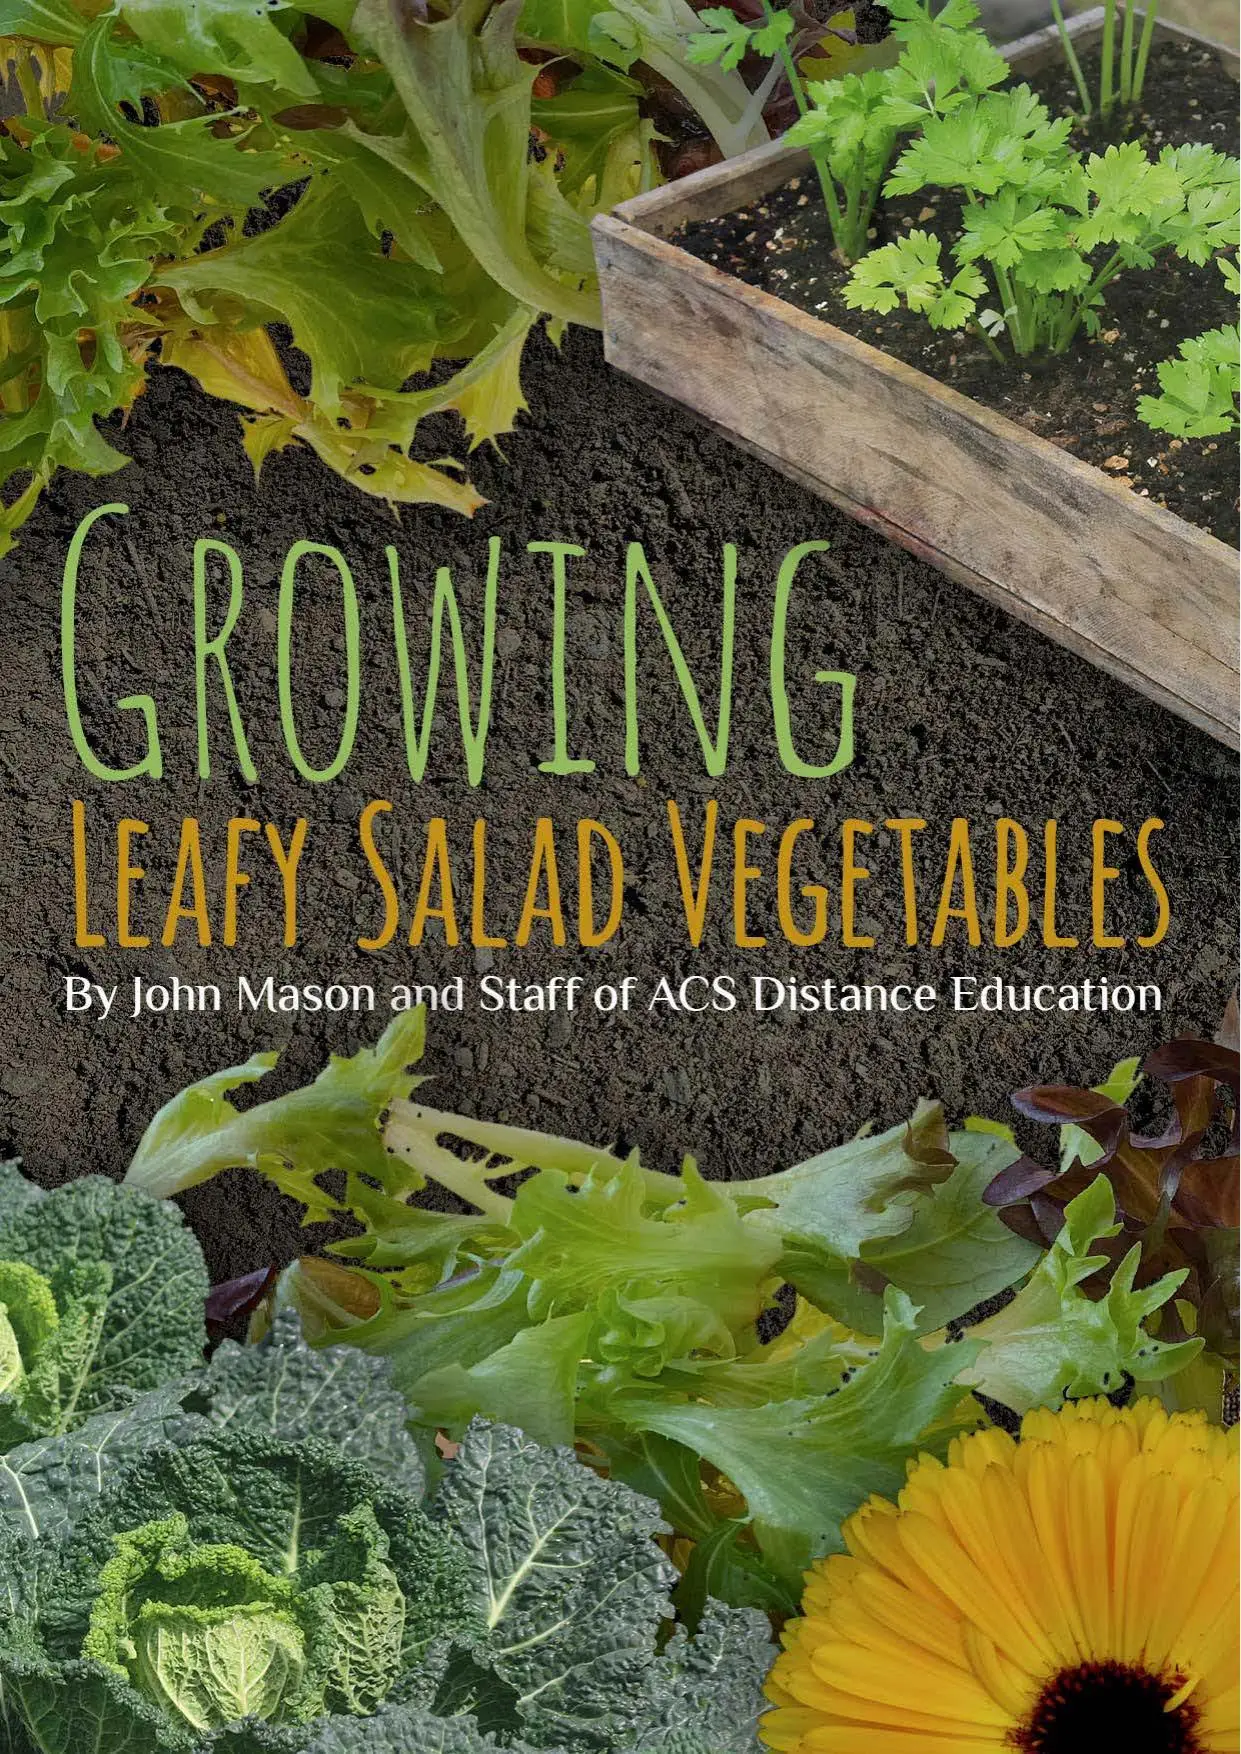 Growing Leafy Salad Vegetables / AvaxHome